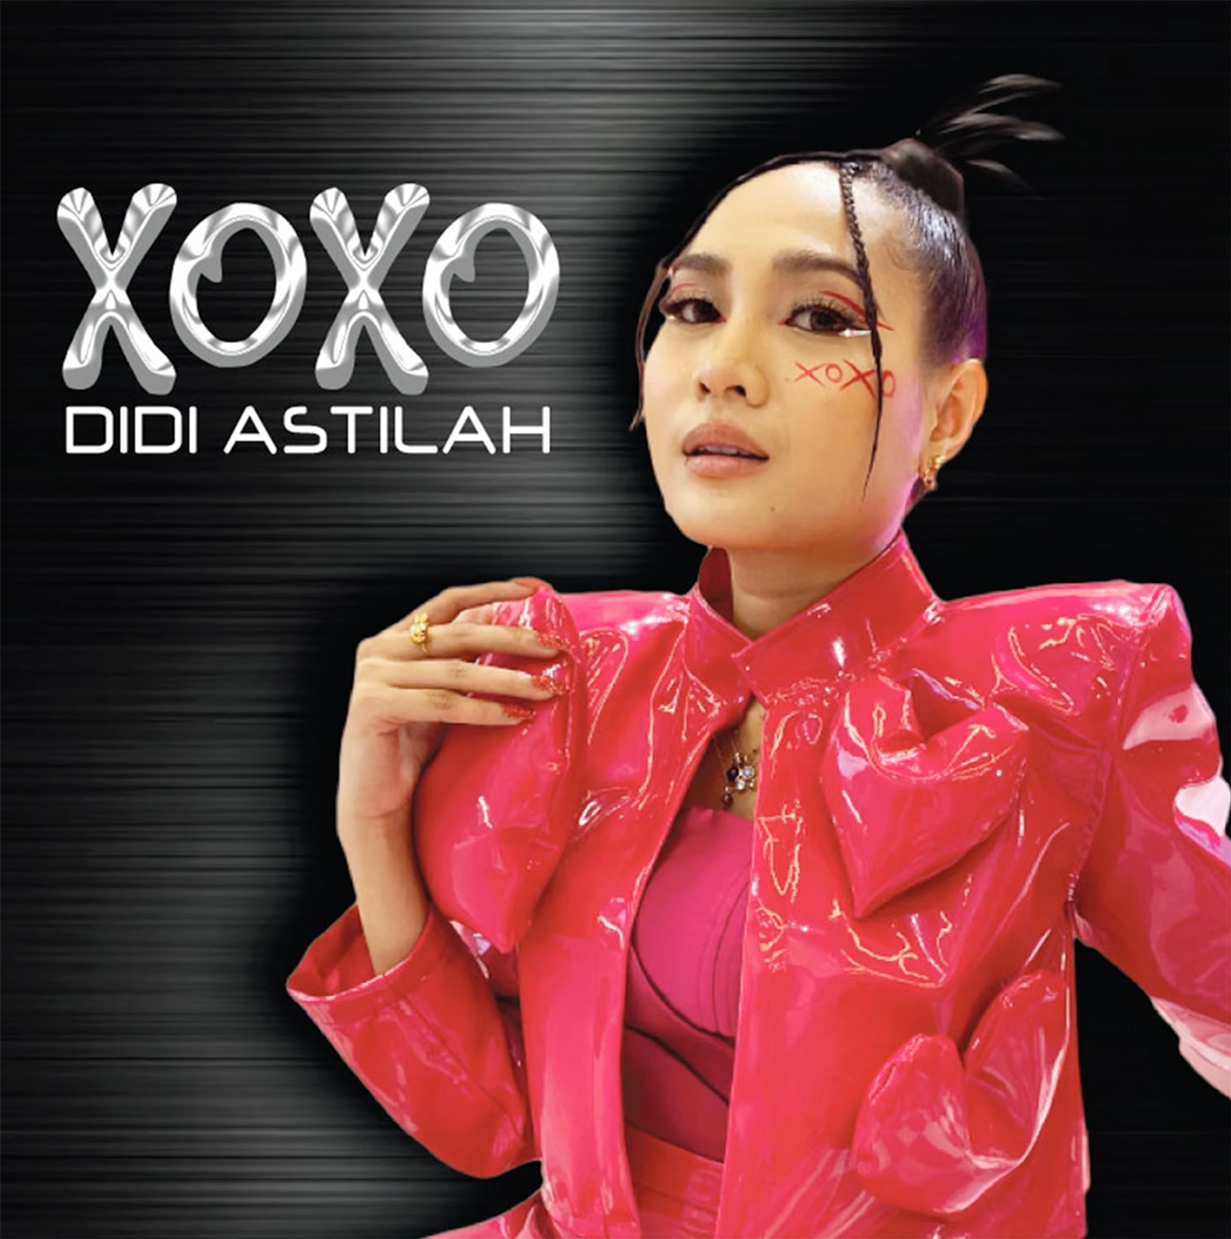 Lirik Lagu Didi Astilah - XOXO